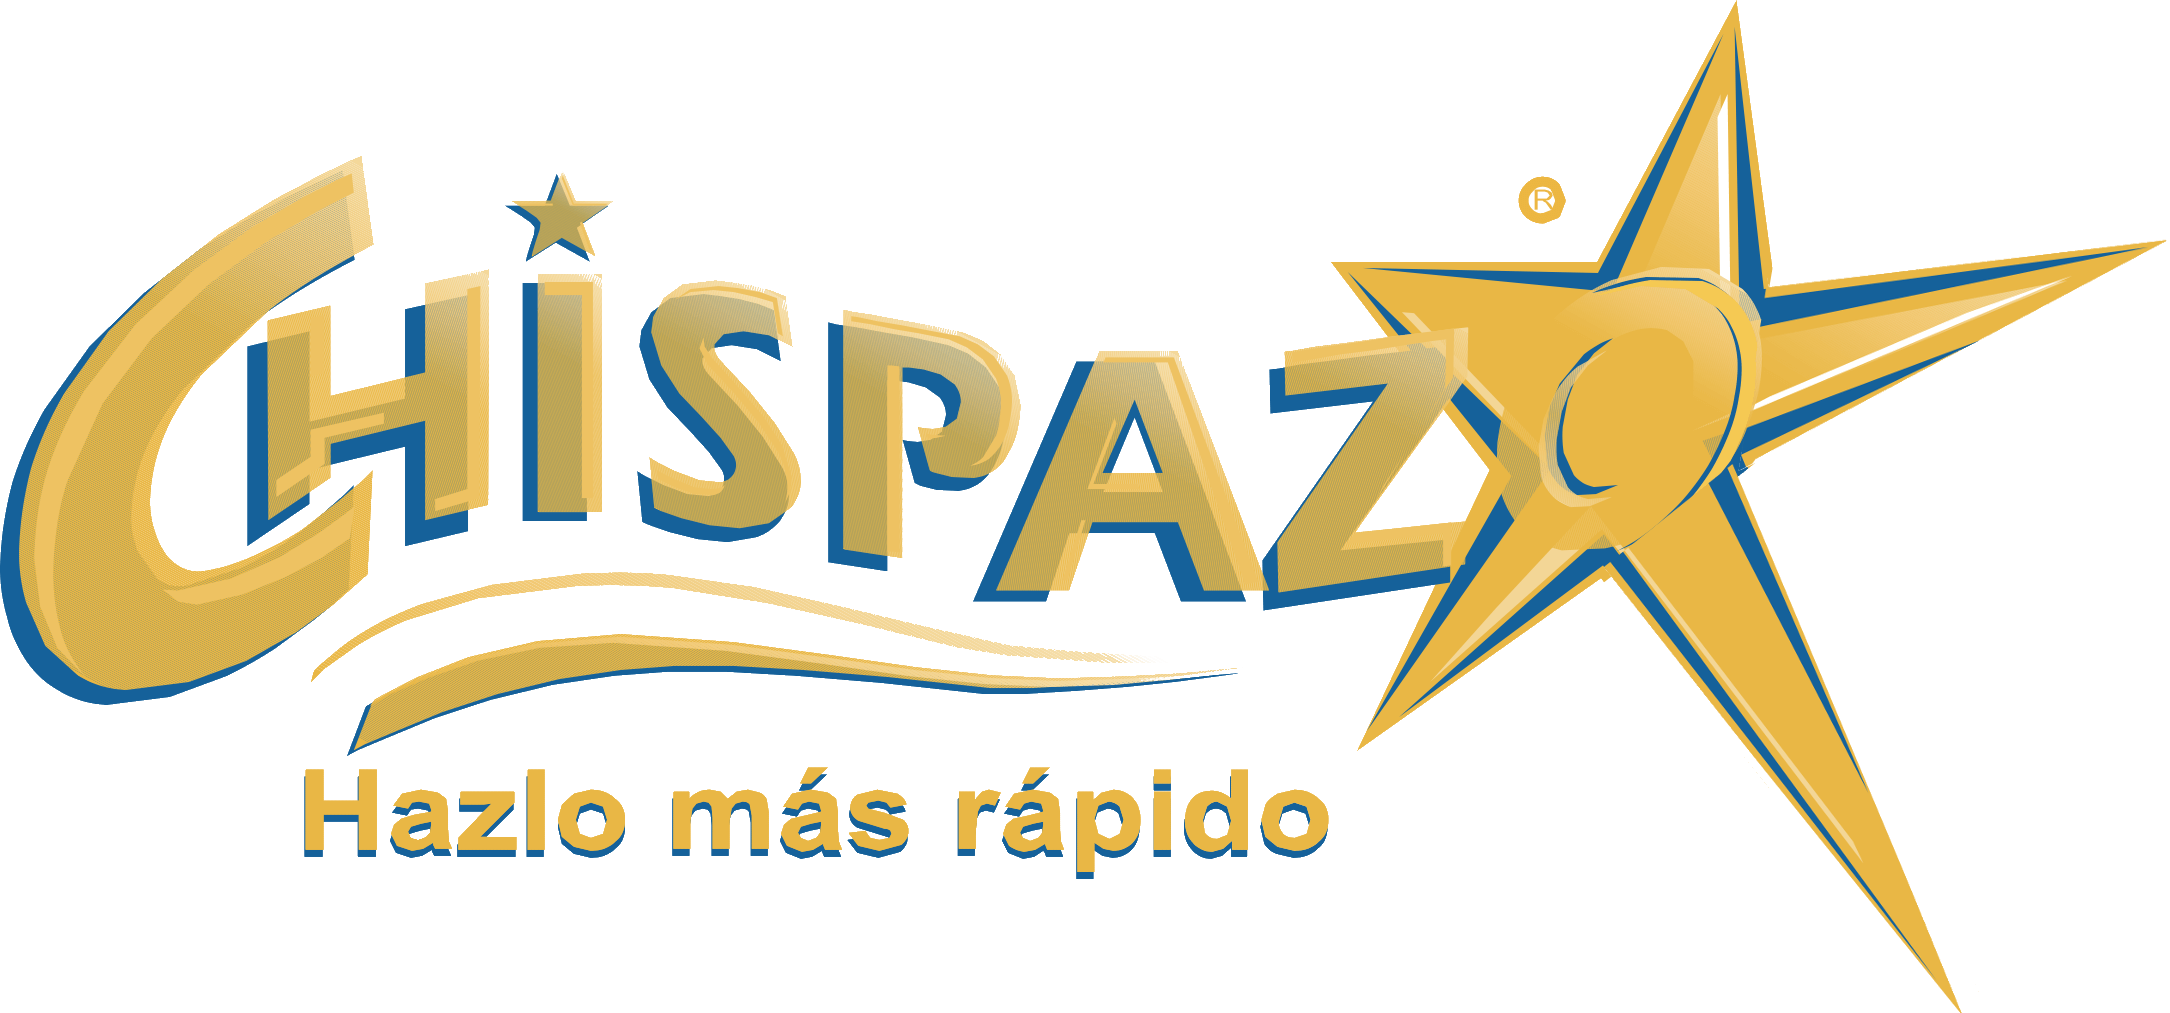 Logo Chispazo De Las Tres